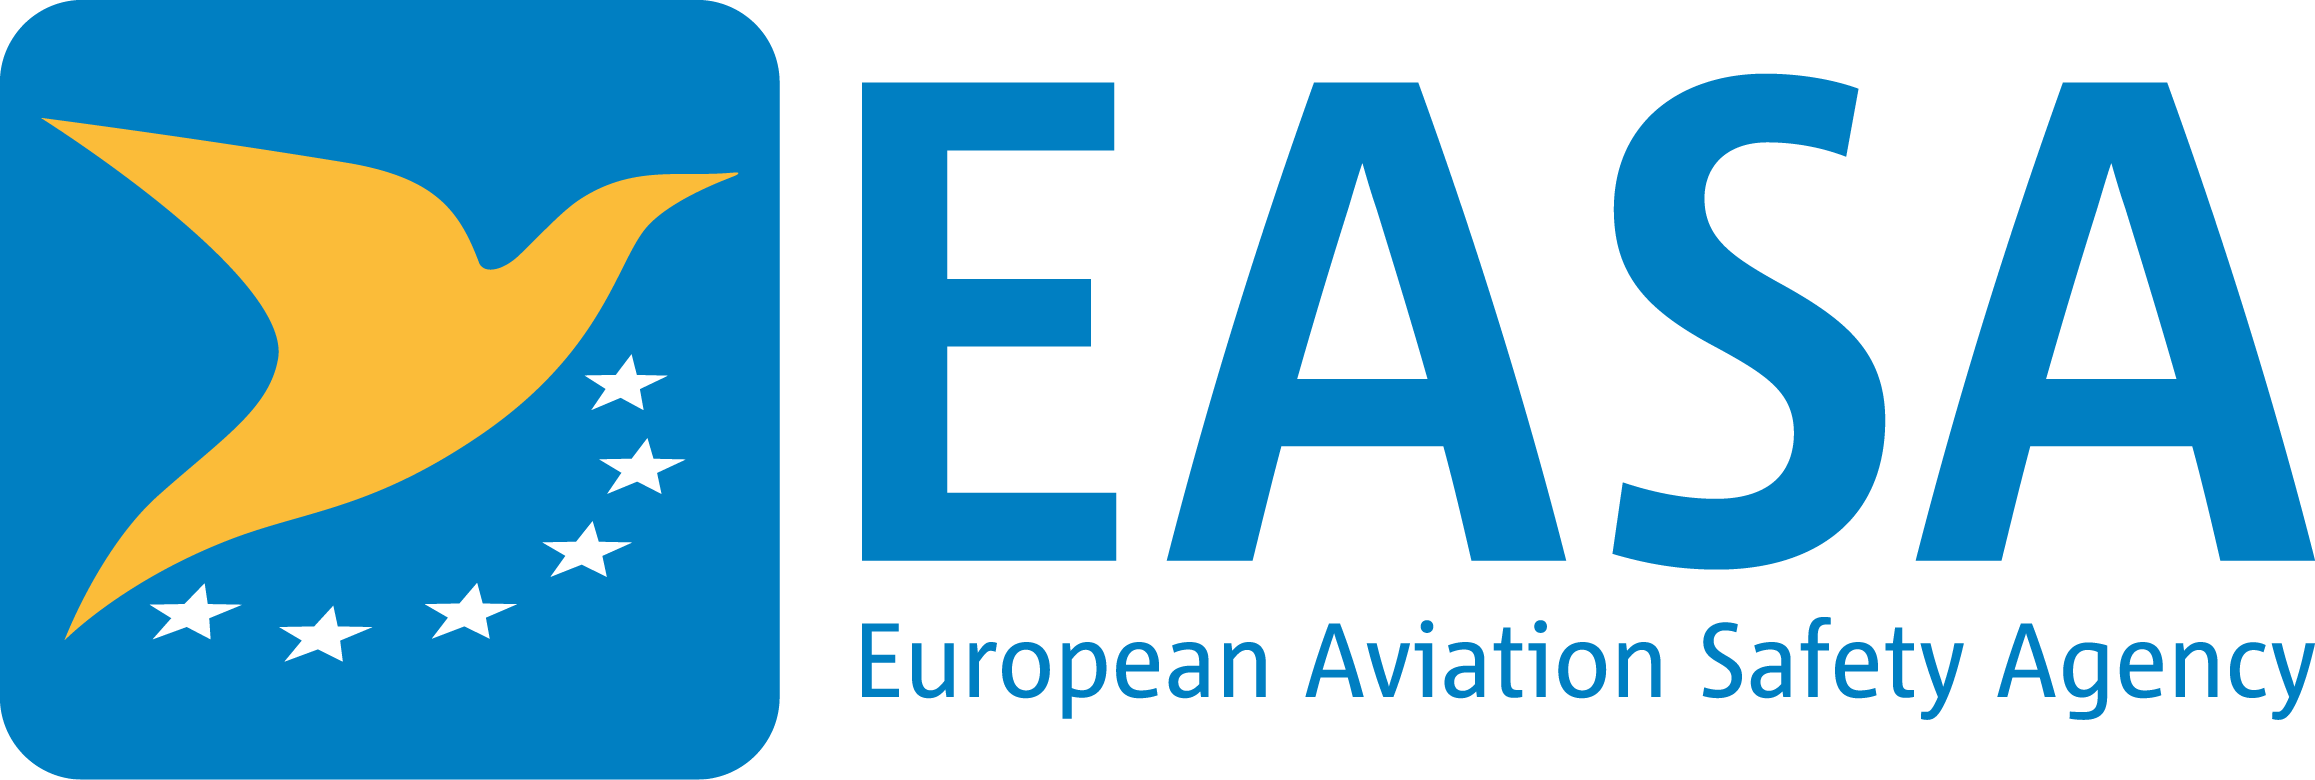 EU Dronecertifikat pr.1 Januar 2021